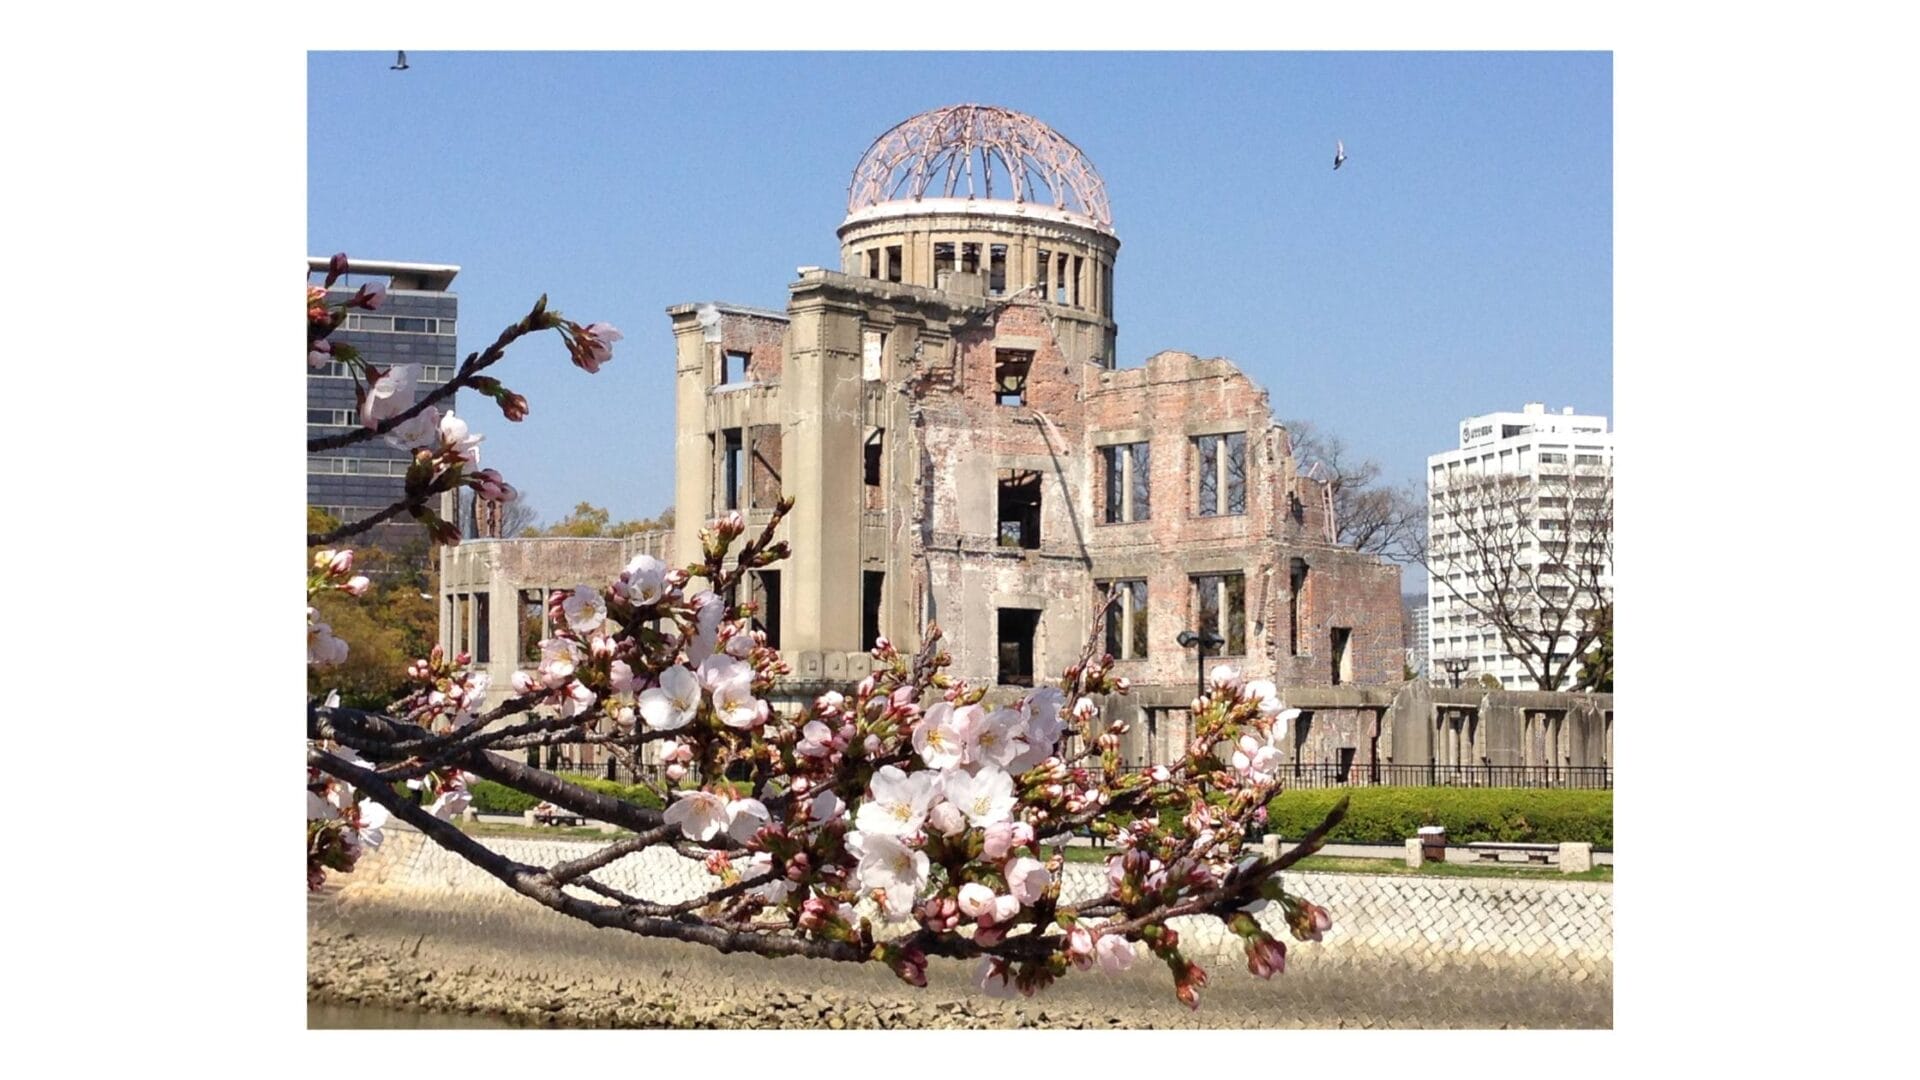 The atomic dome Hiroshima peace memorial park